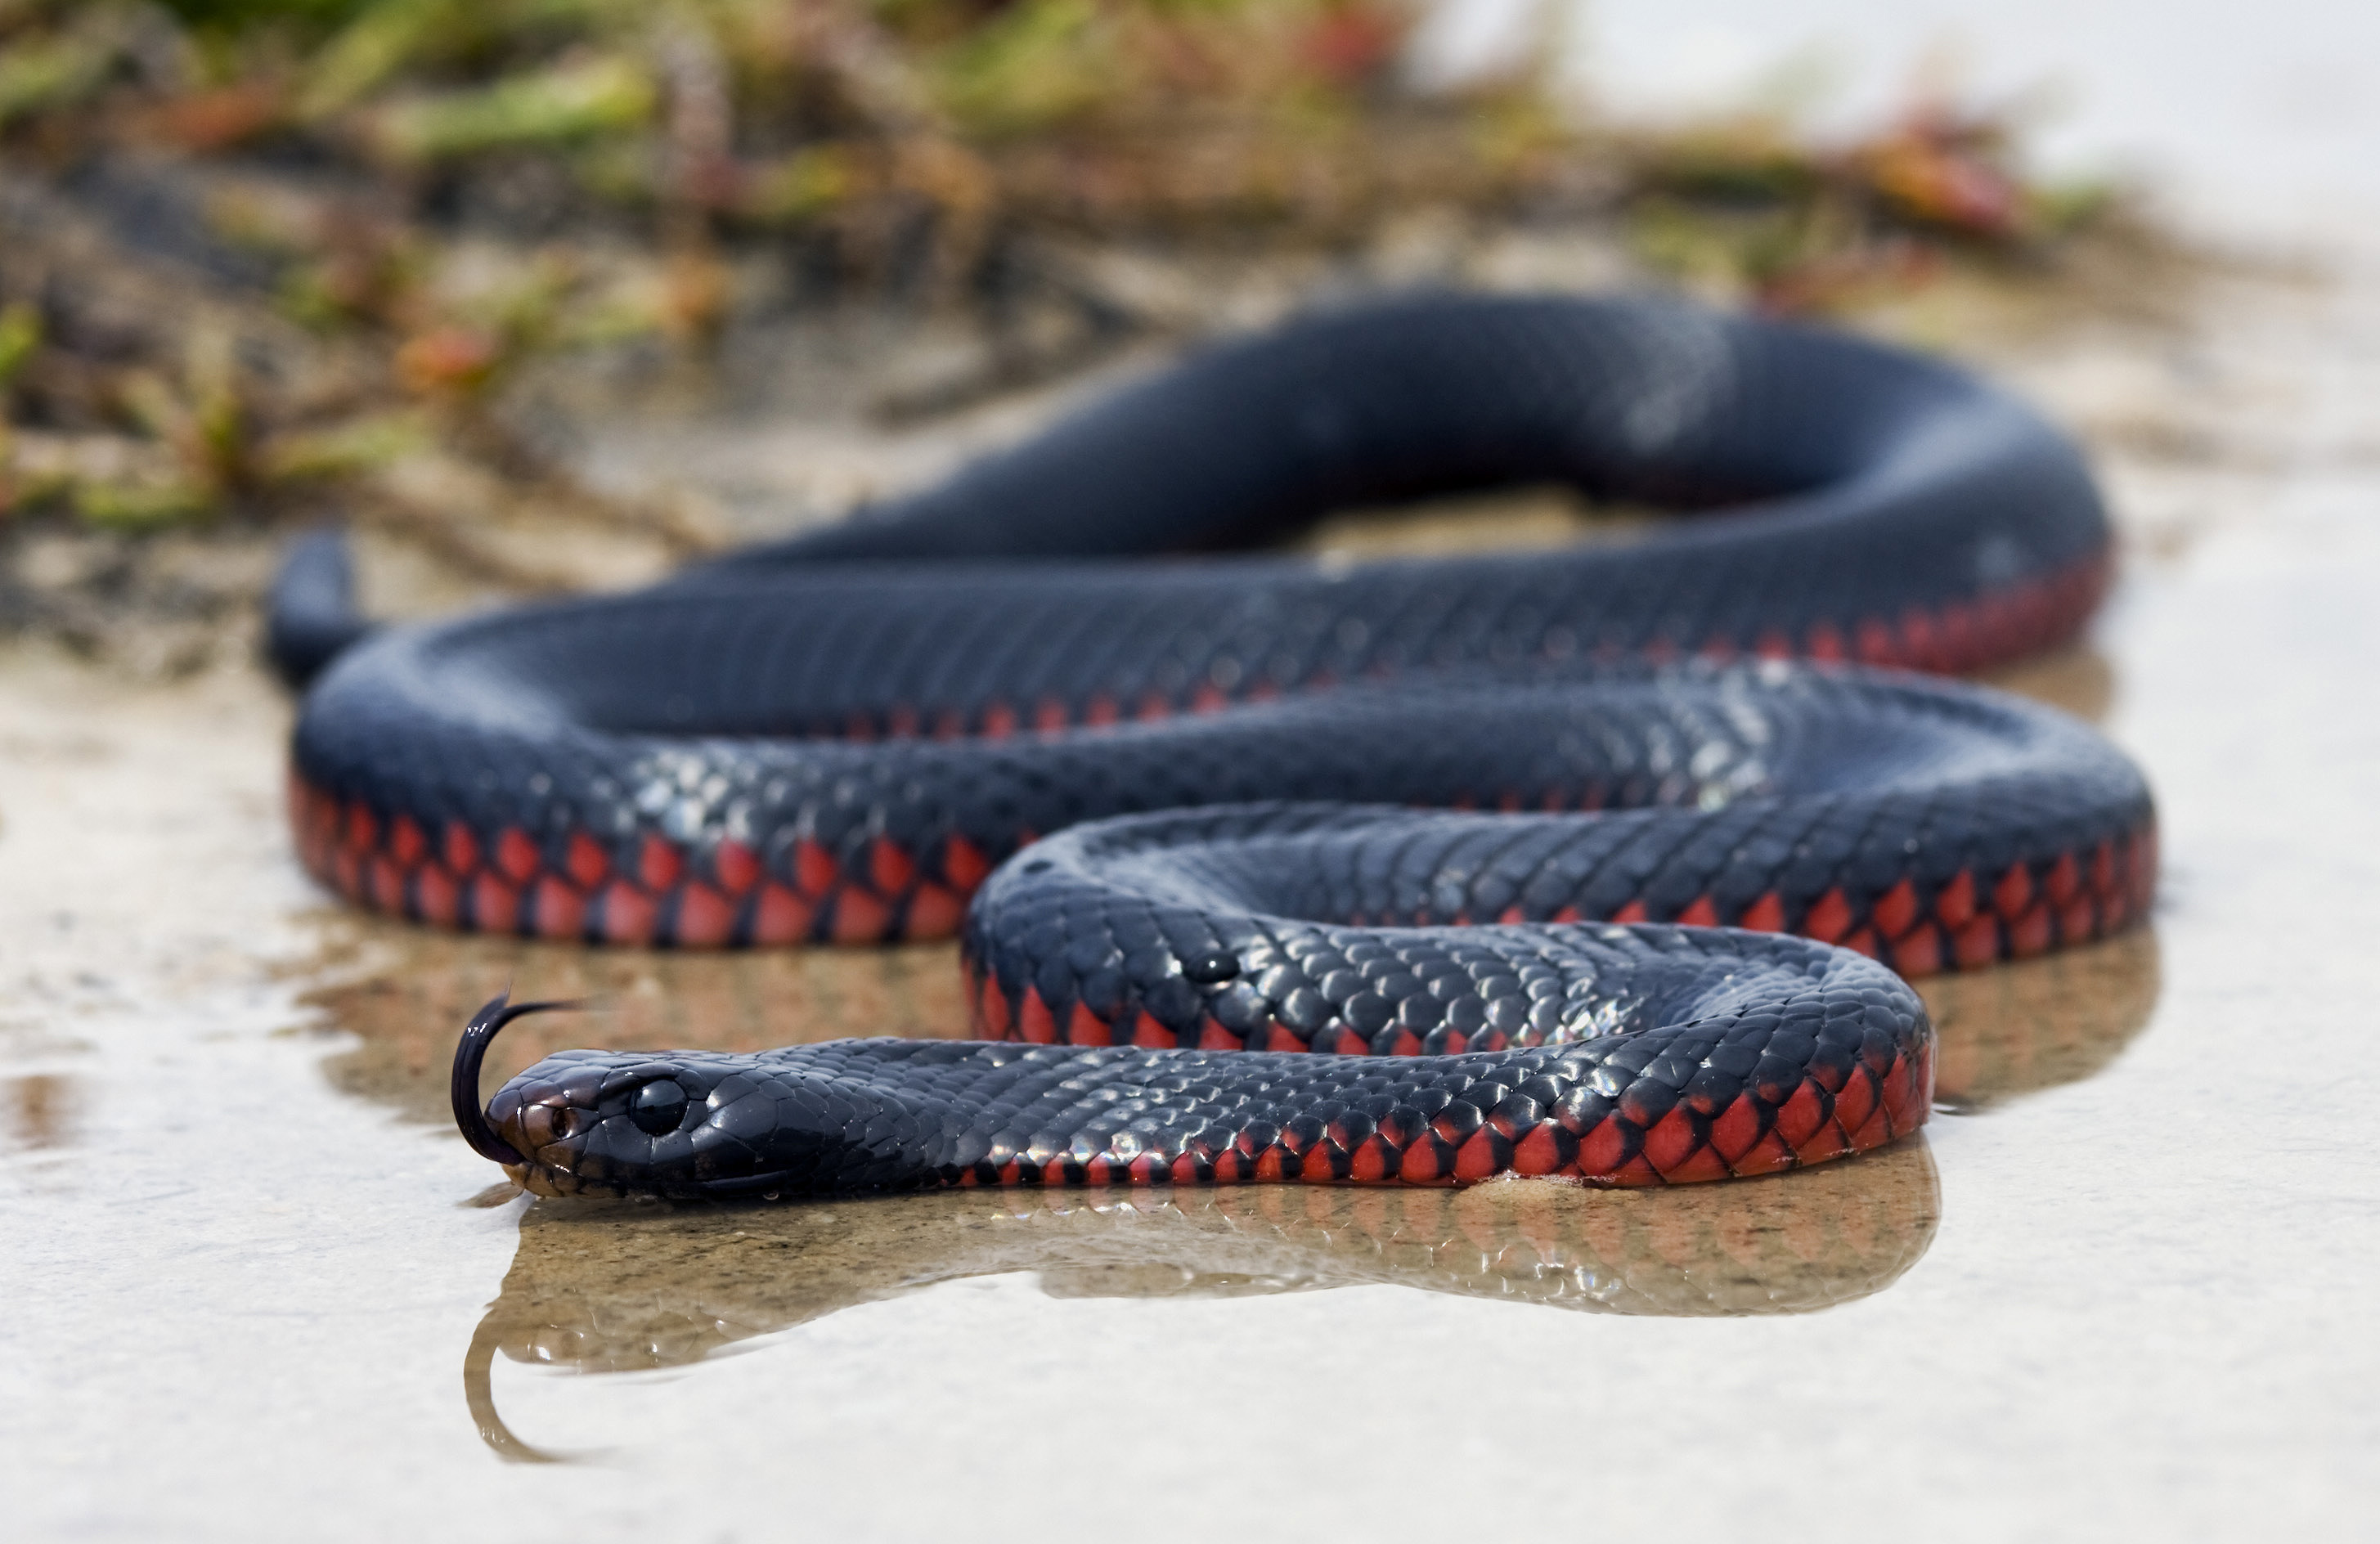 Black snake photo